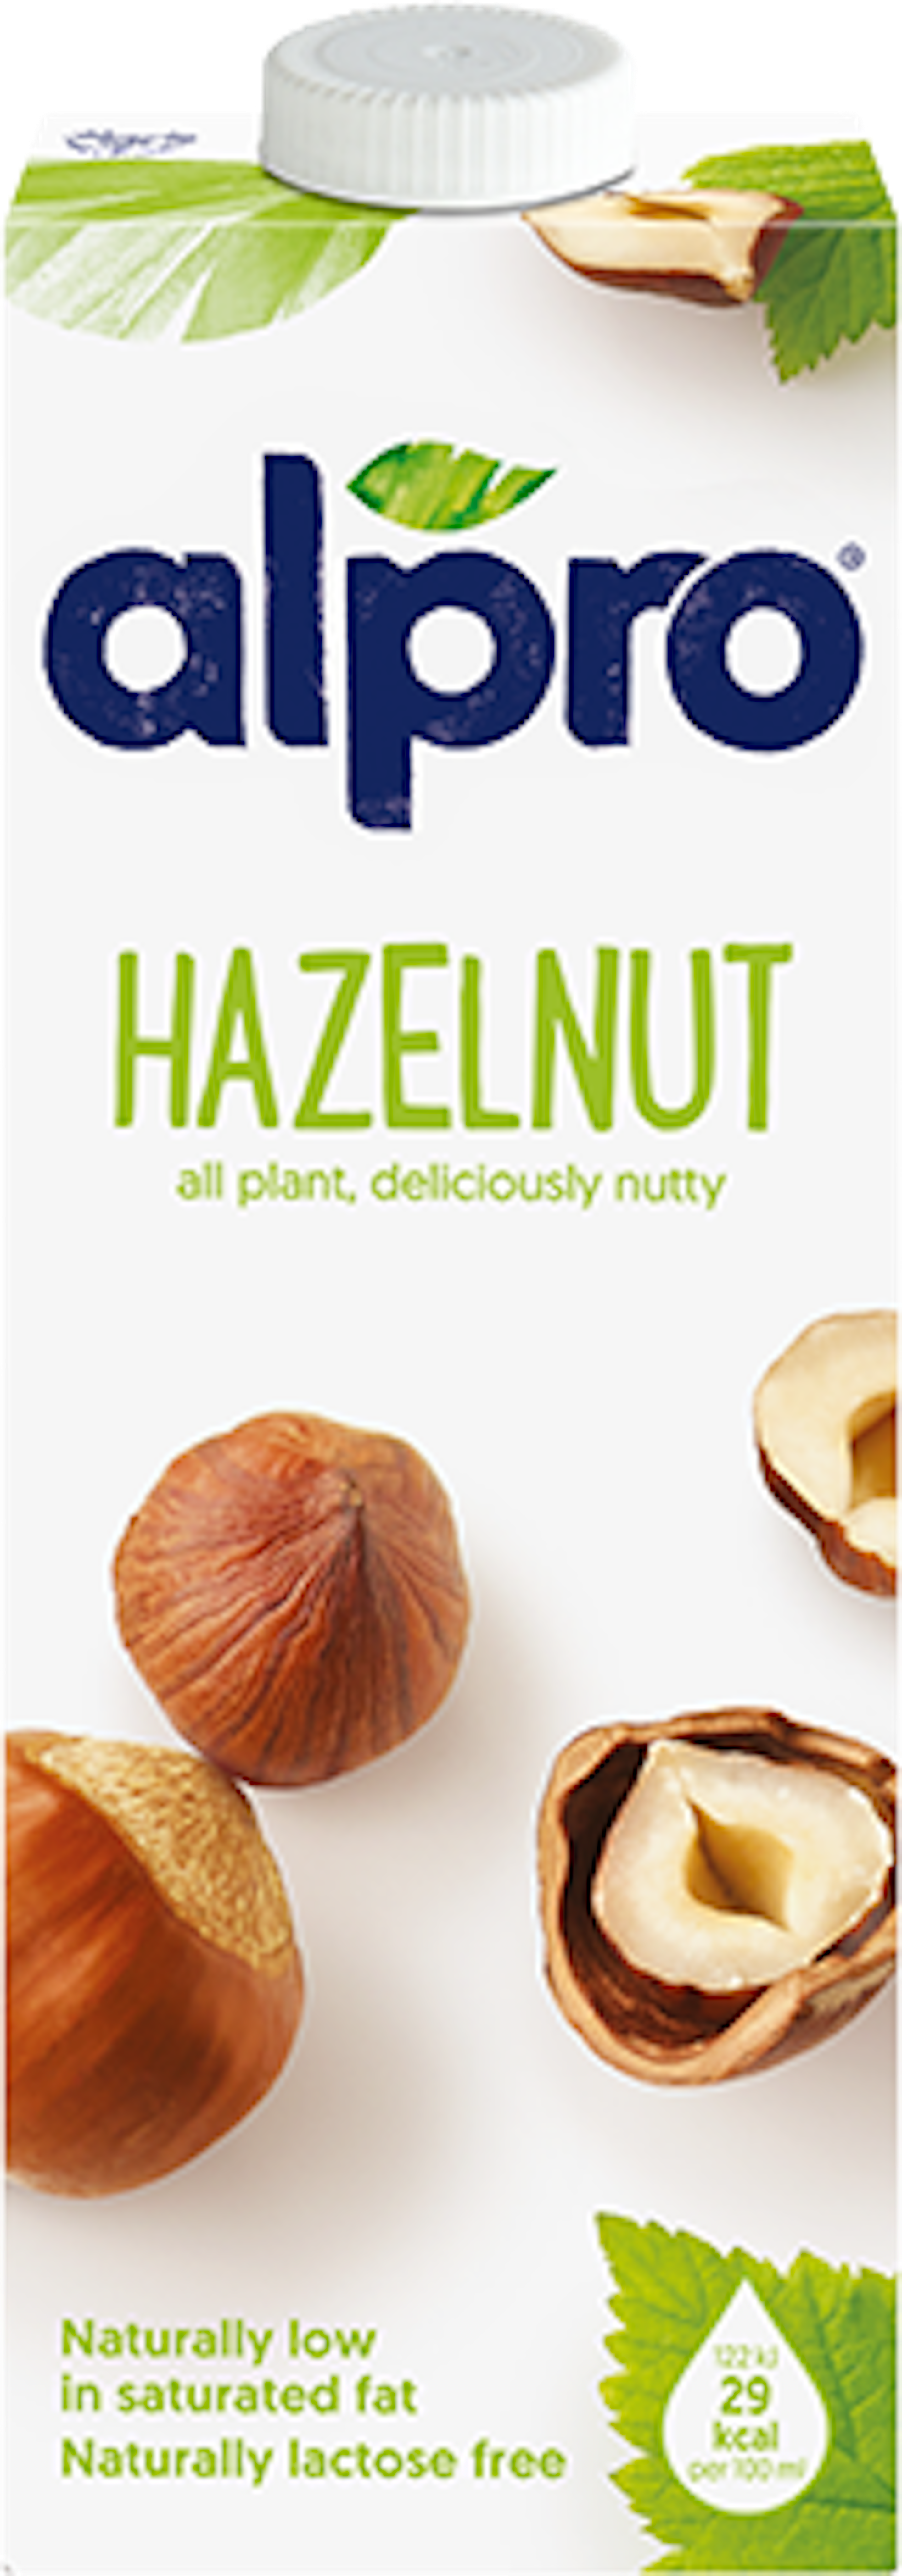 Hazelnut Original